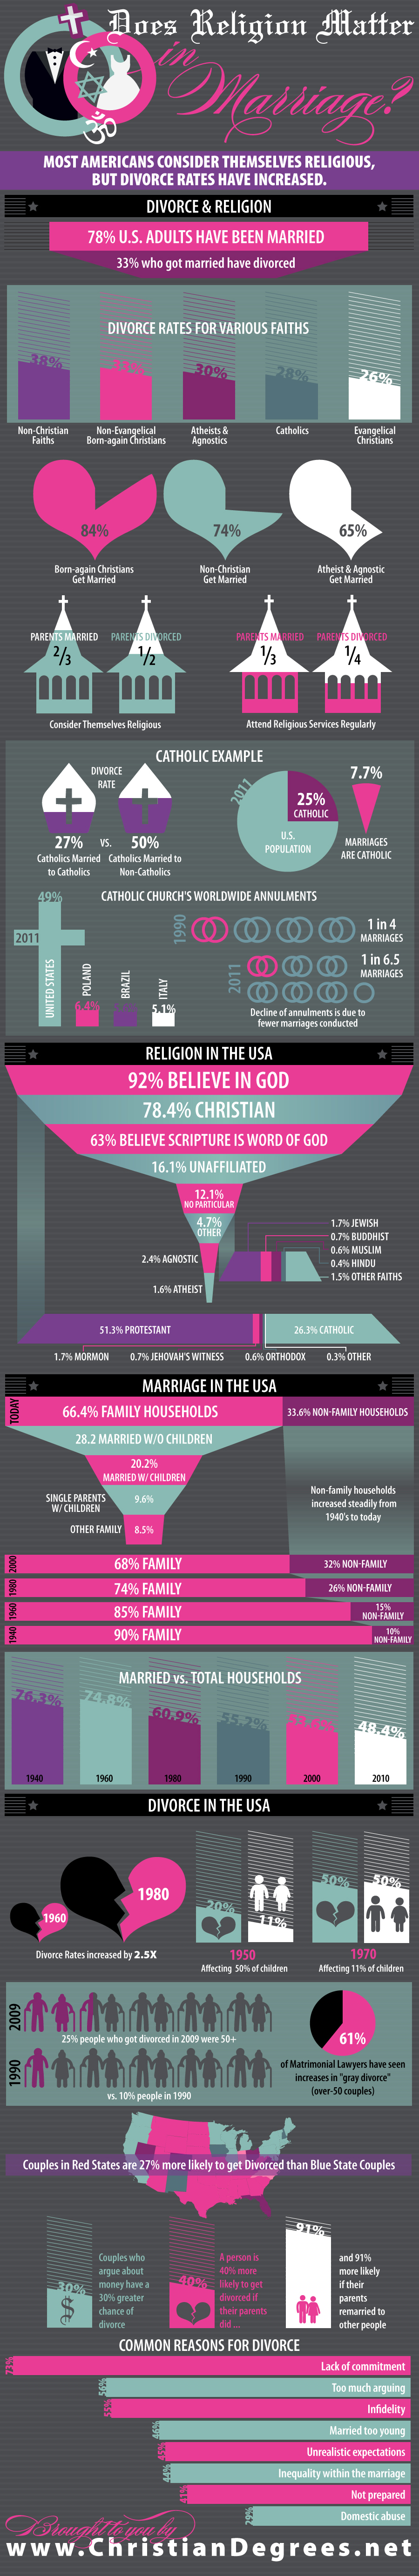 Religion-Marriage-Infographic